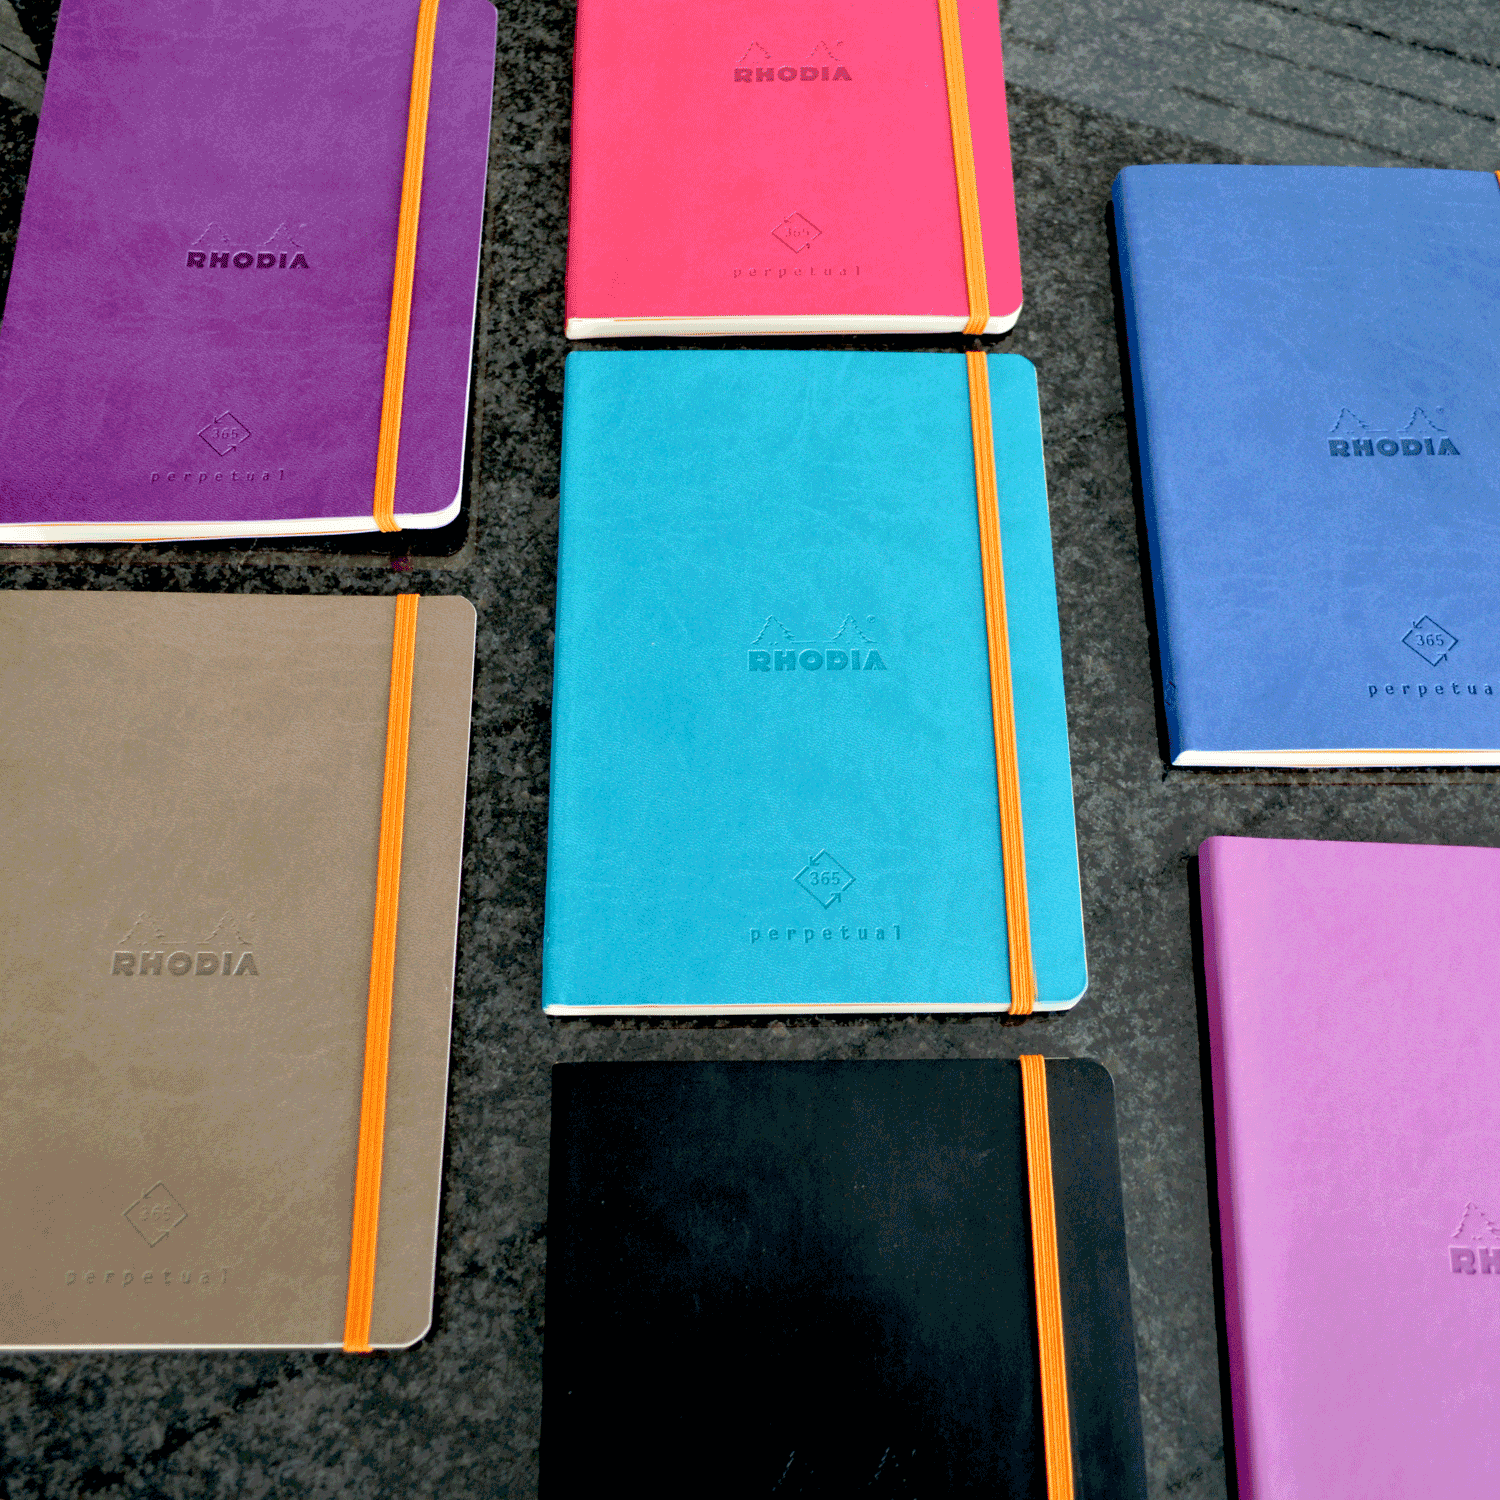 Rhodia Perpetual Planner Notebook